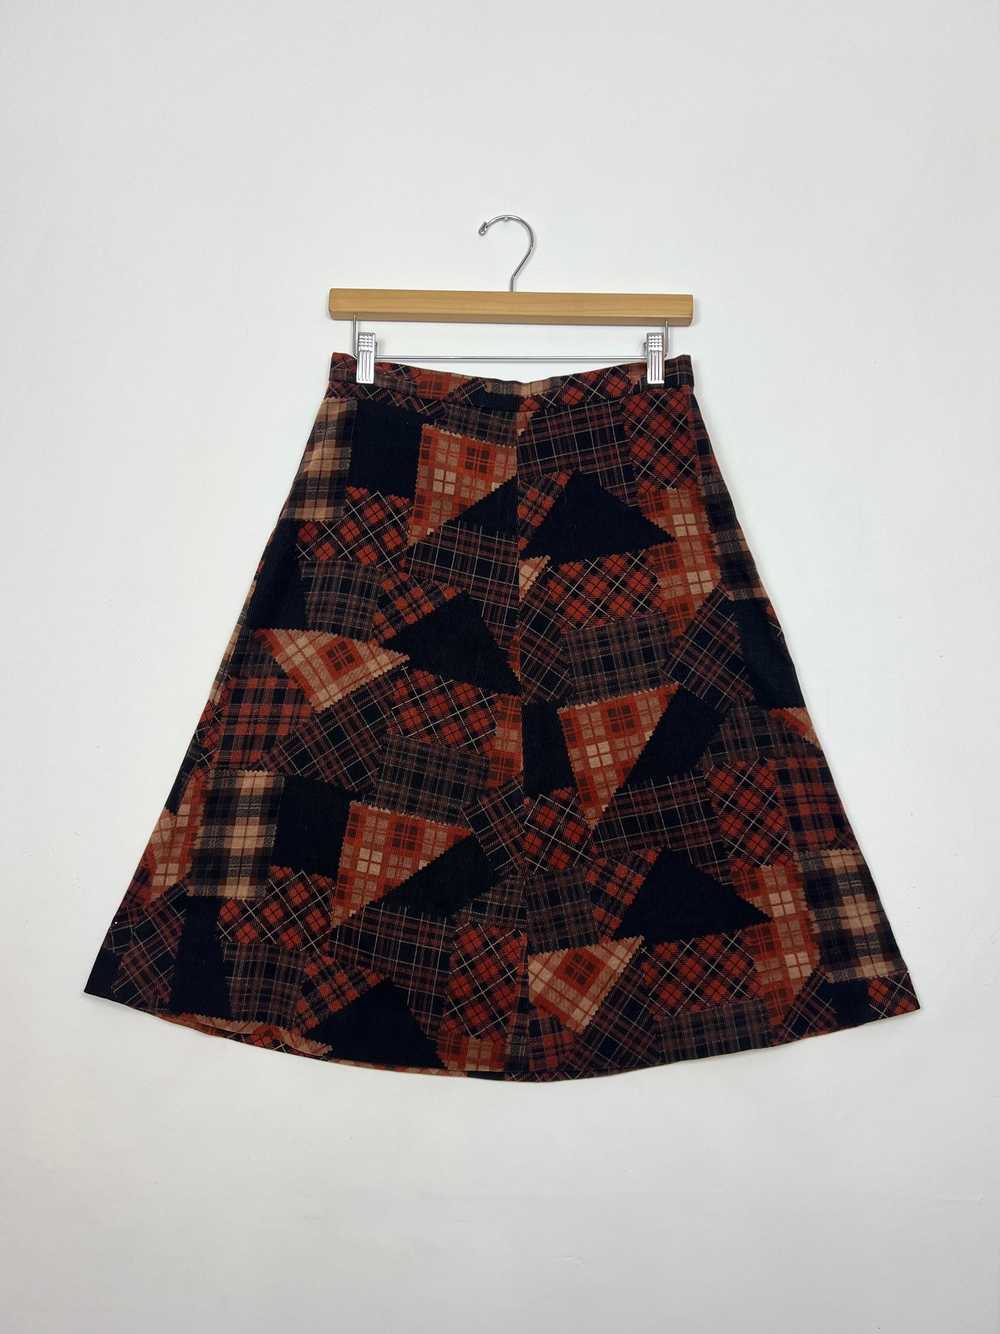 1970's Handmade Plaid Patchwork Printed Skirt - image 2